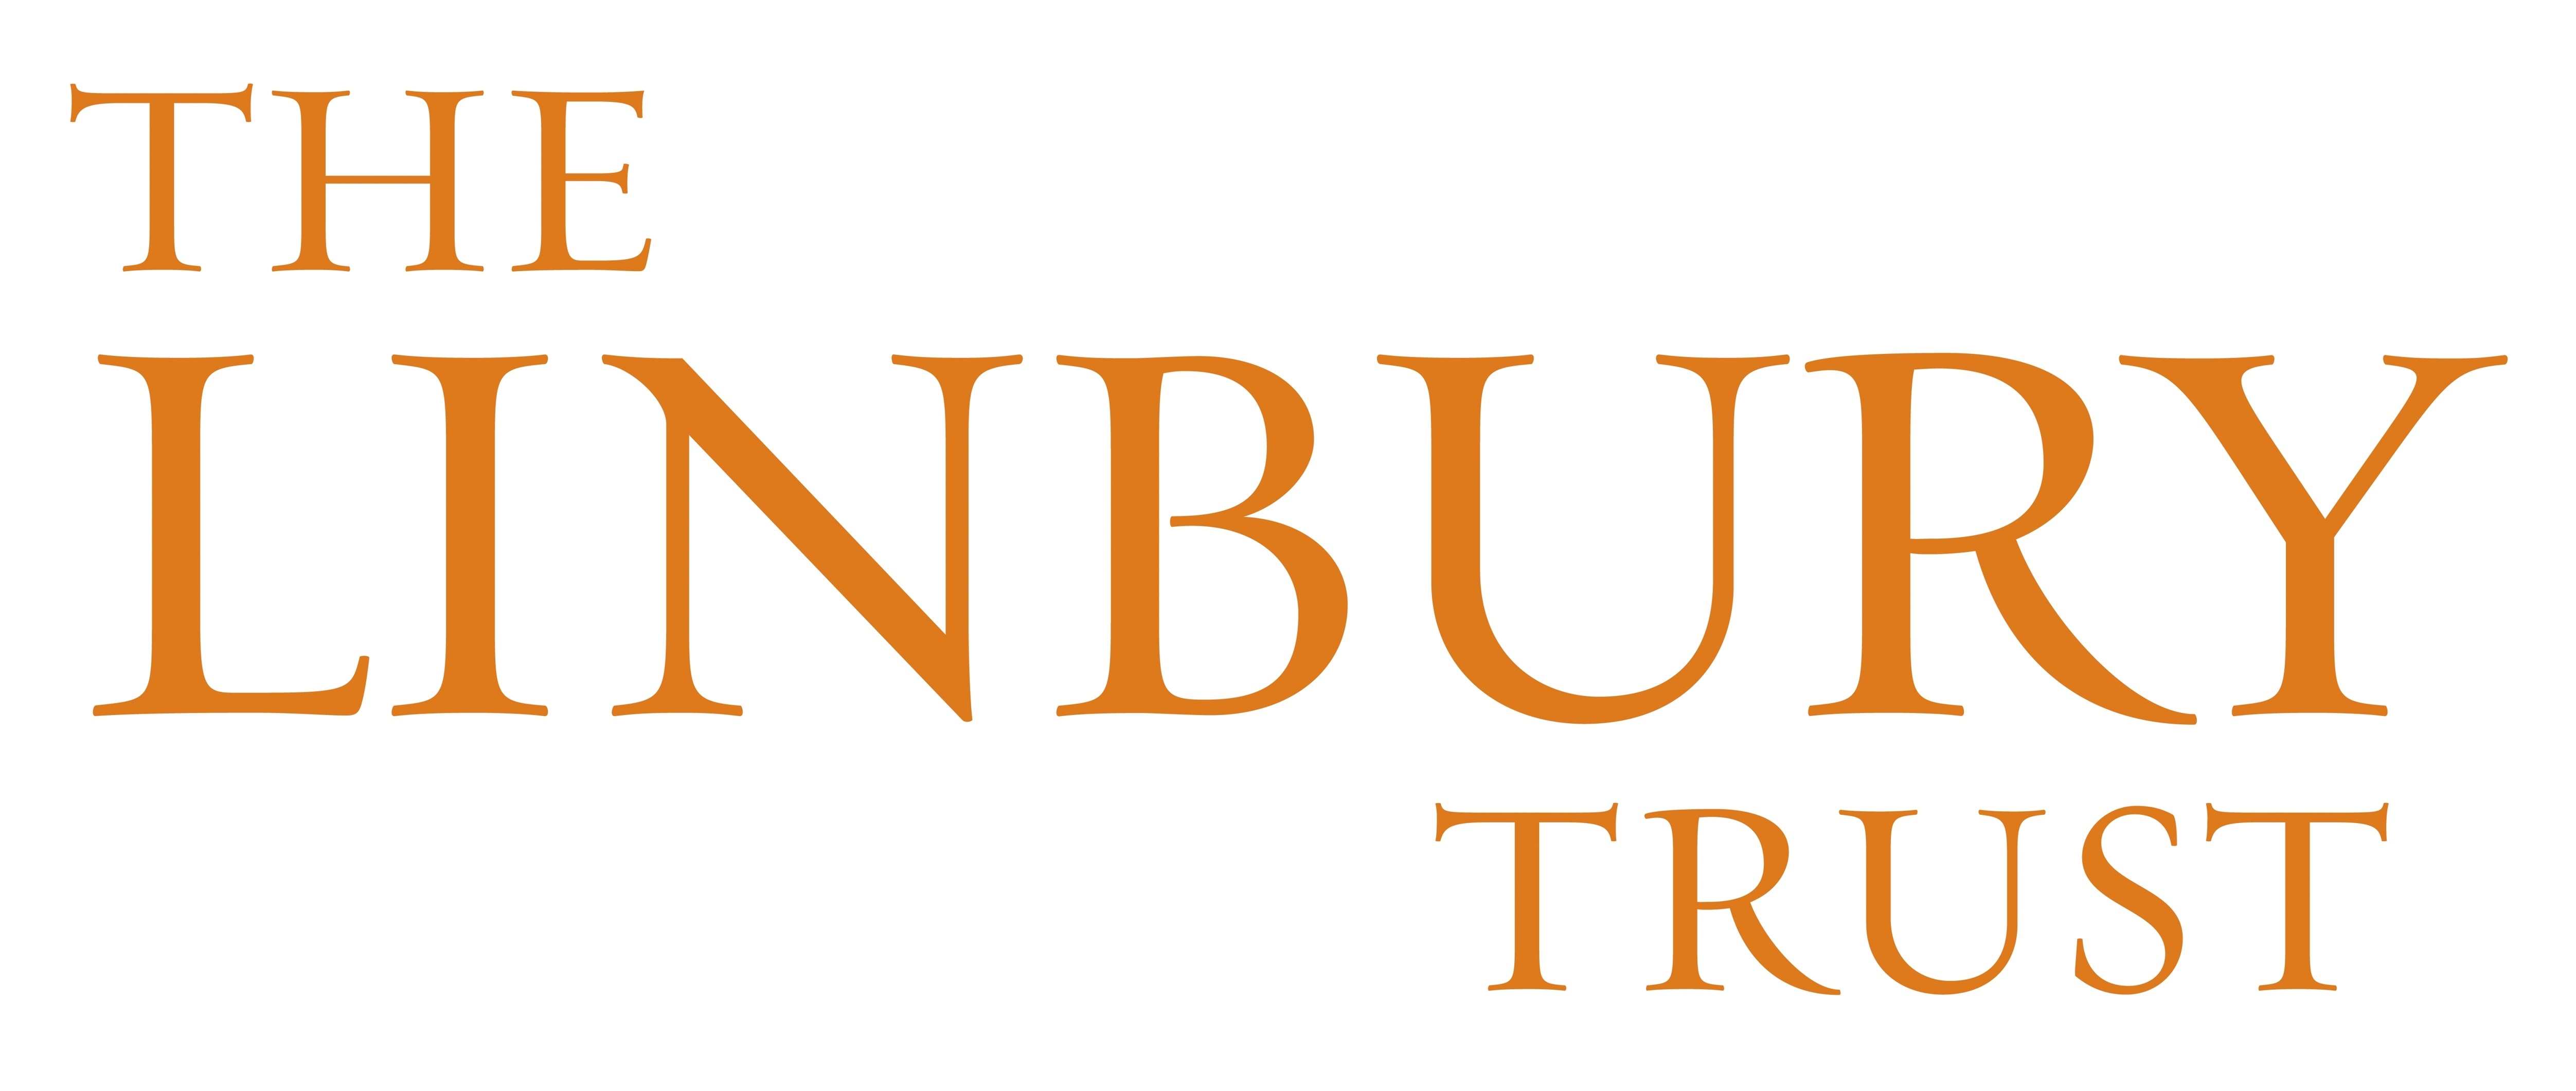 The Linbury Trust logo.